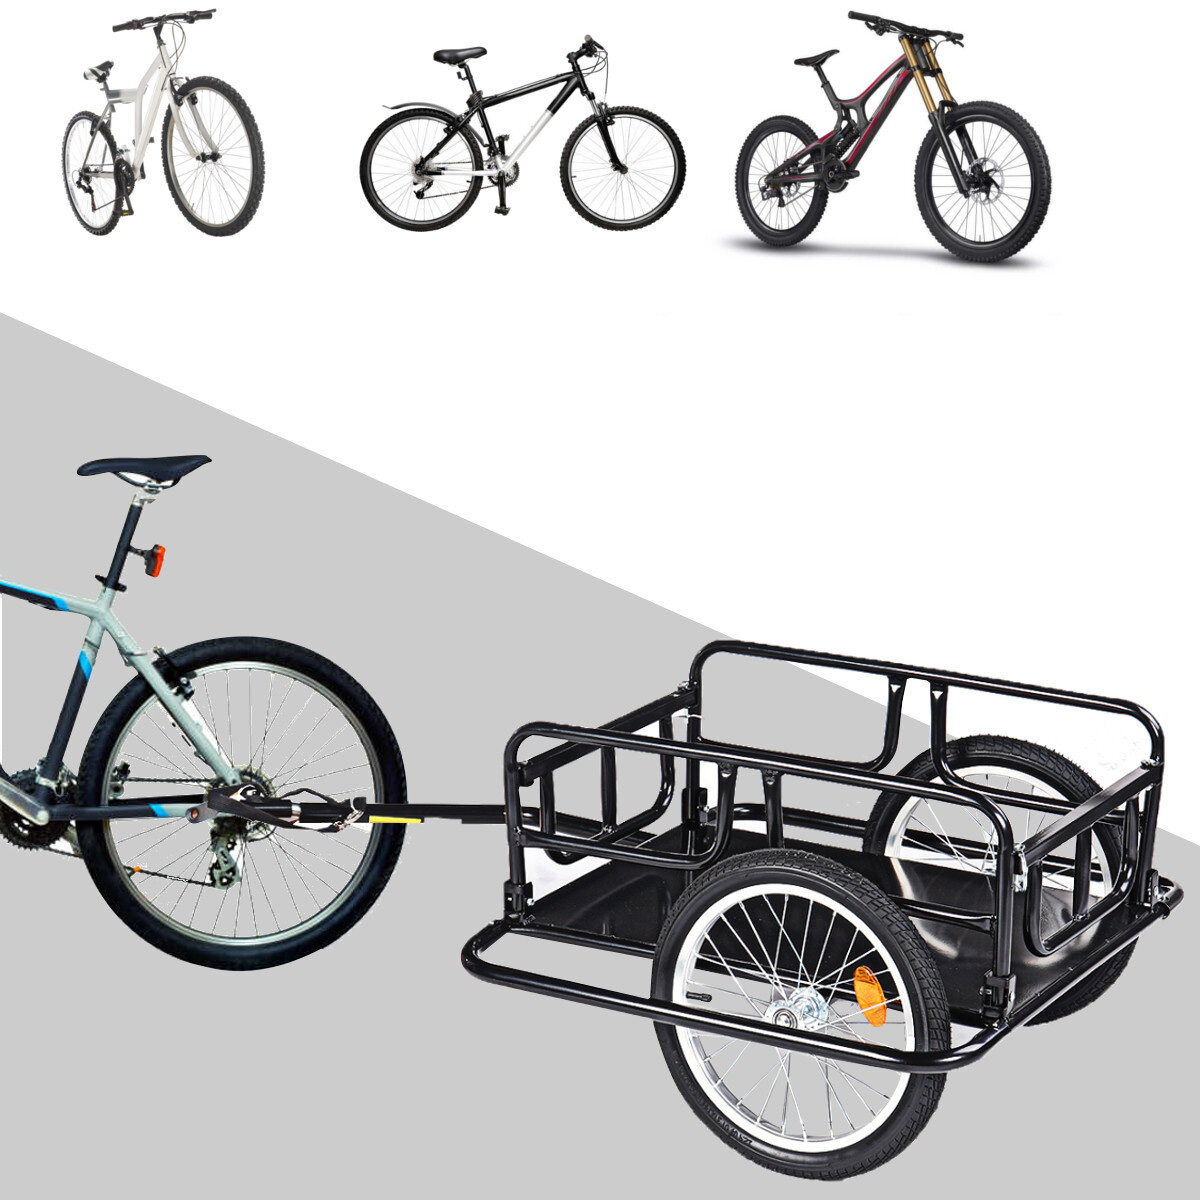 50KG Folding Bicycle Trailer 2-Wheel Carrier Transport Luggage Pet Chair Table Stroller Storage Cart Bike Cargo Wheelbar